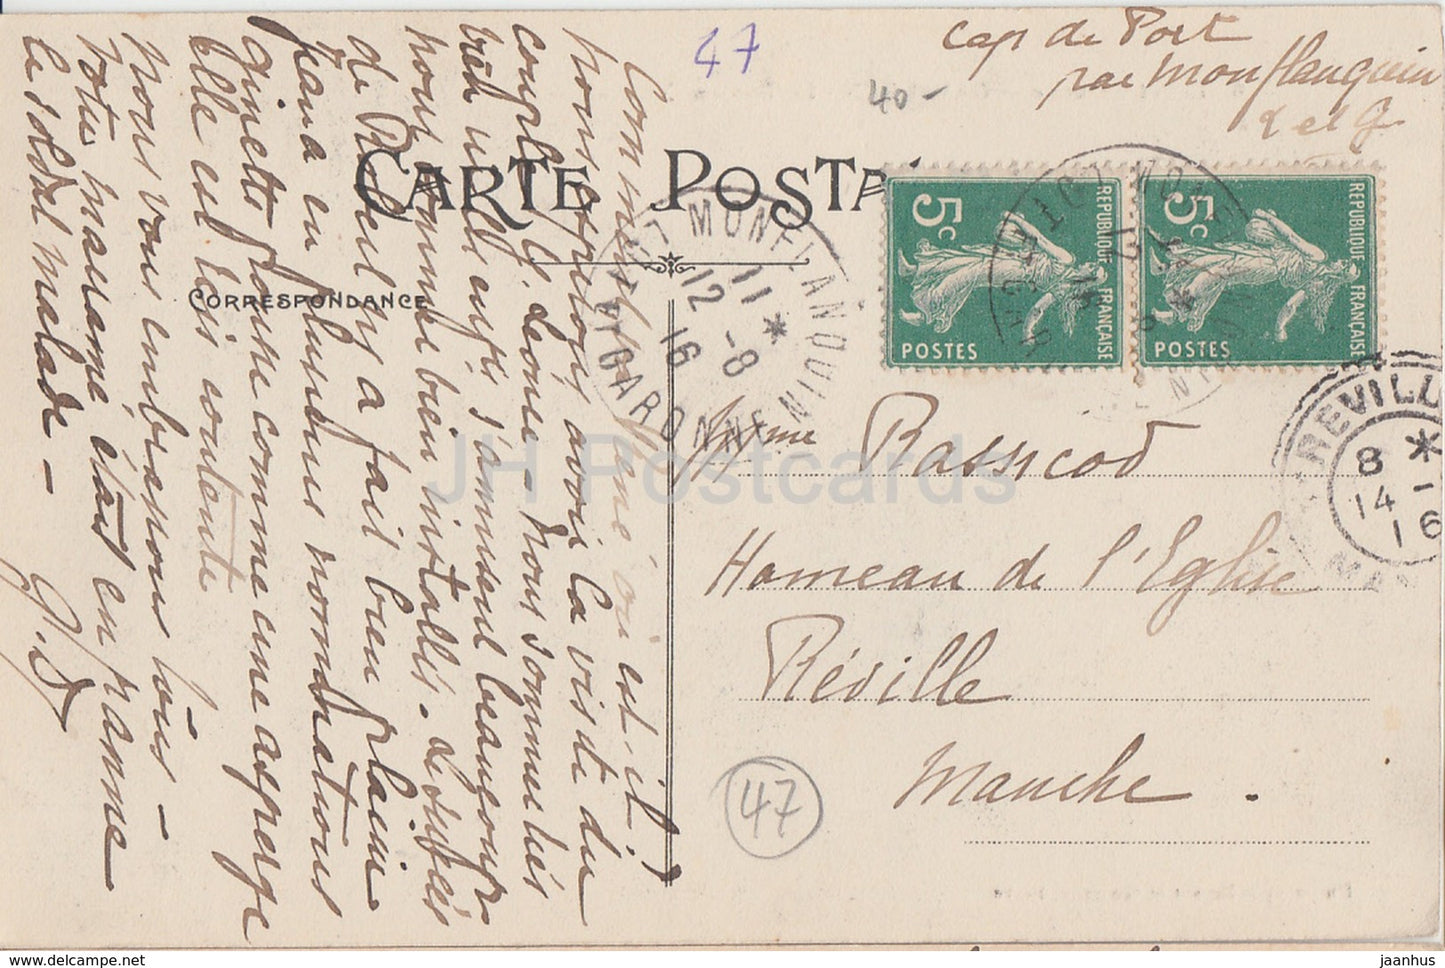 Gavaudun - Le Donjon - 6 - old postcard - 1916 - France - used